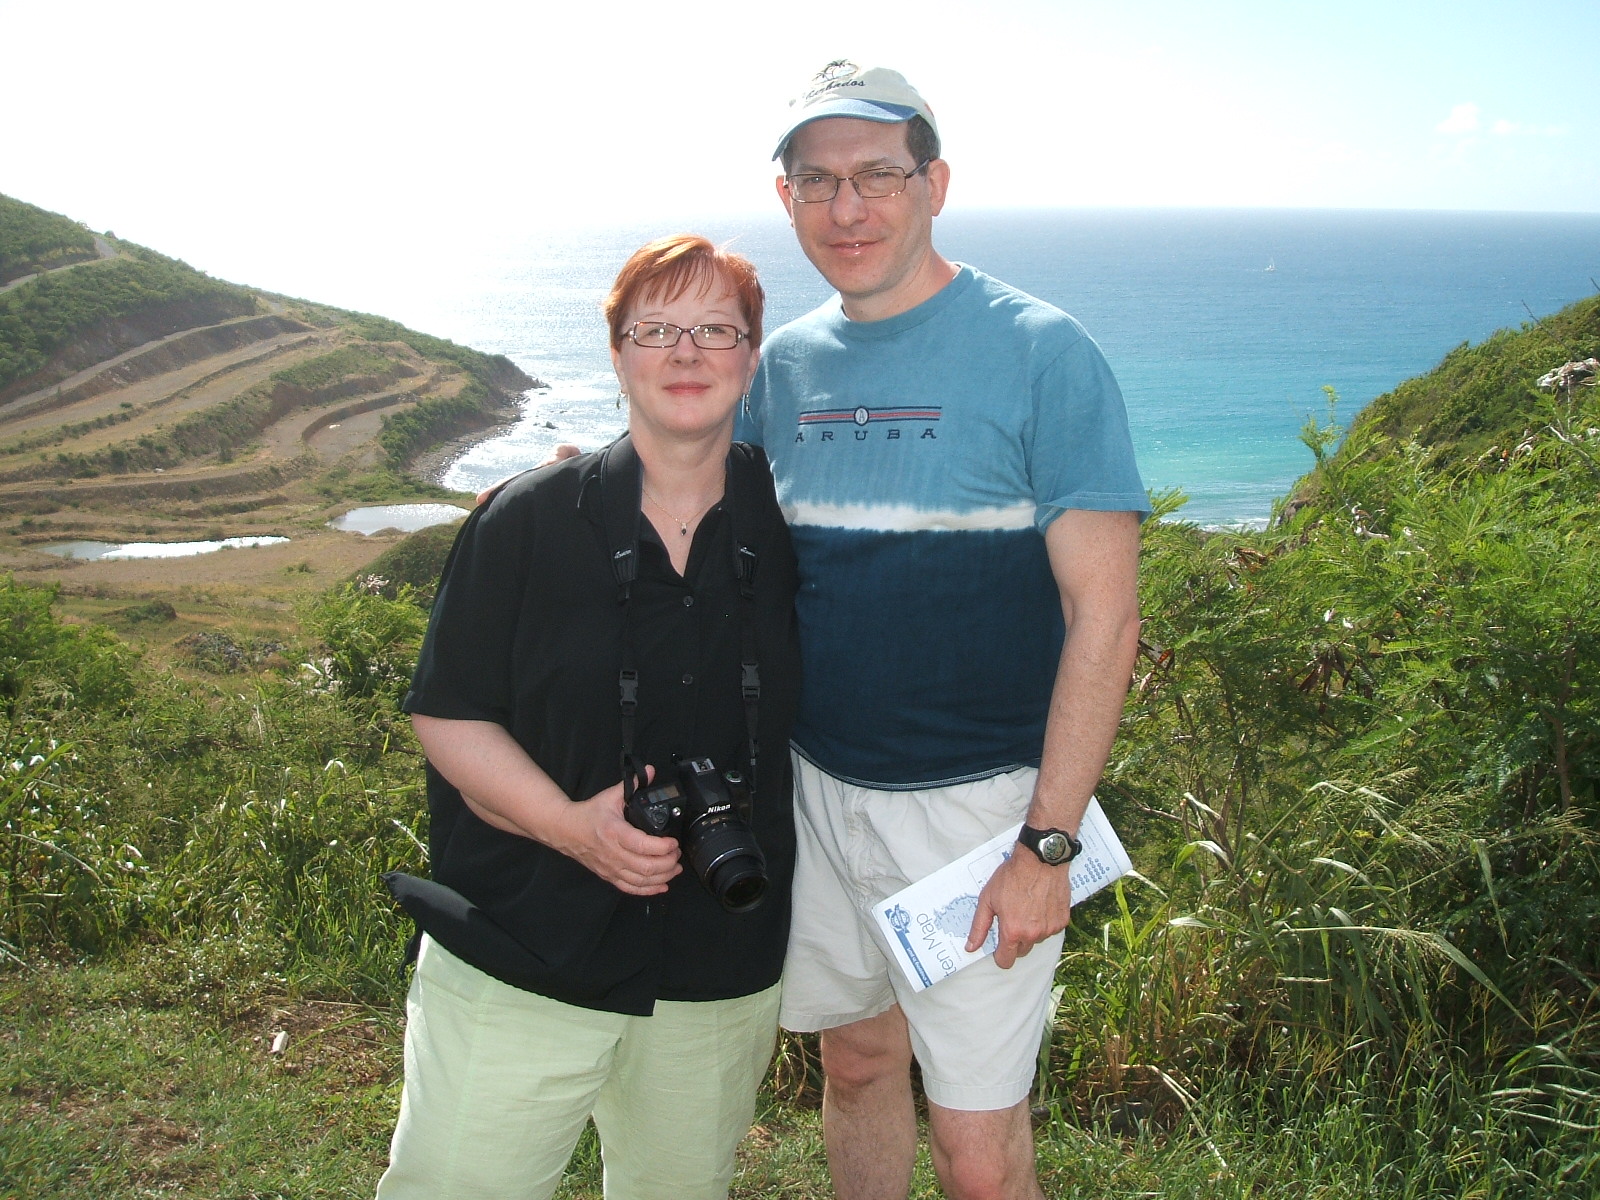 Kathy and Dan in the Bahamas